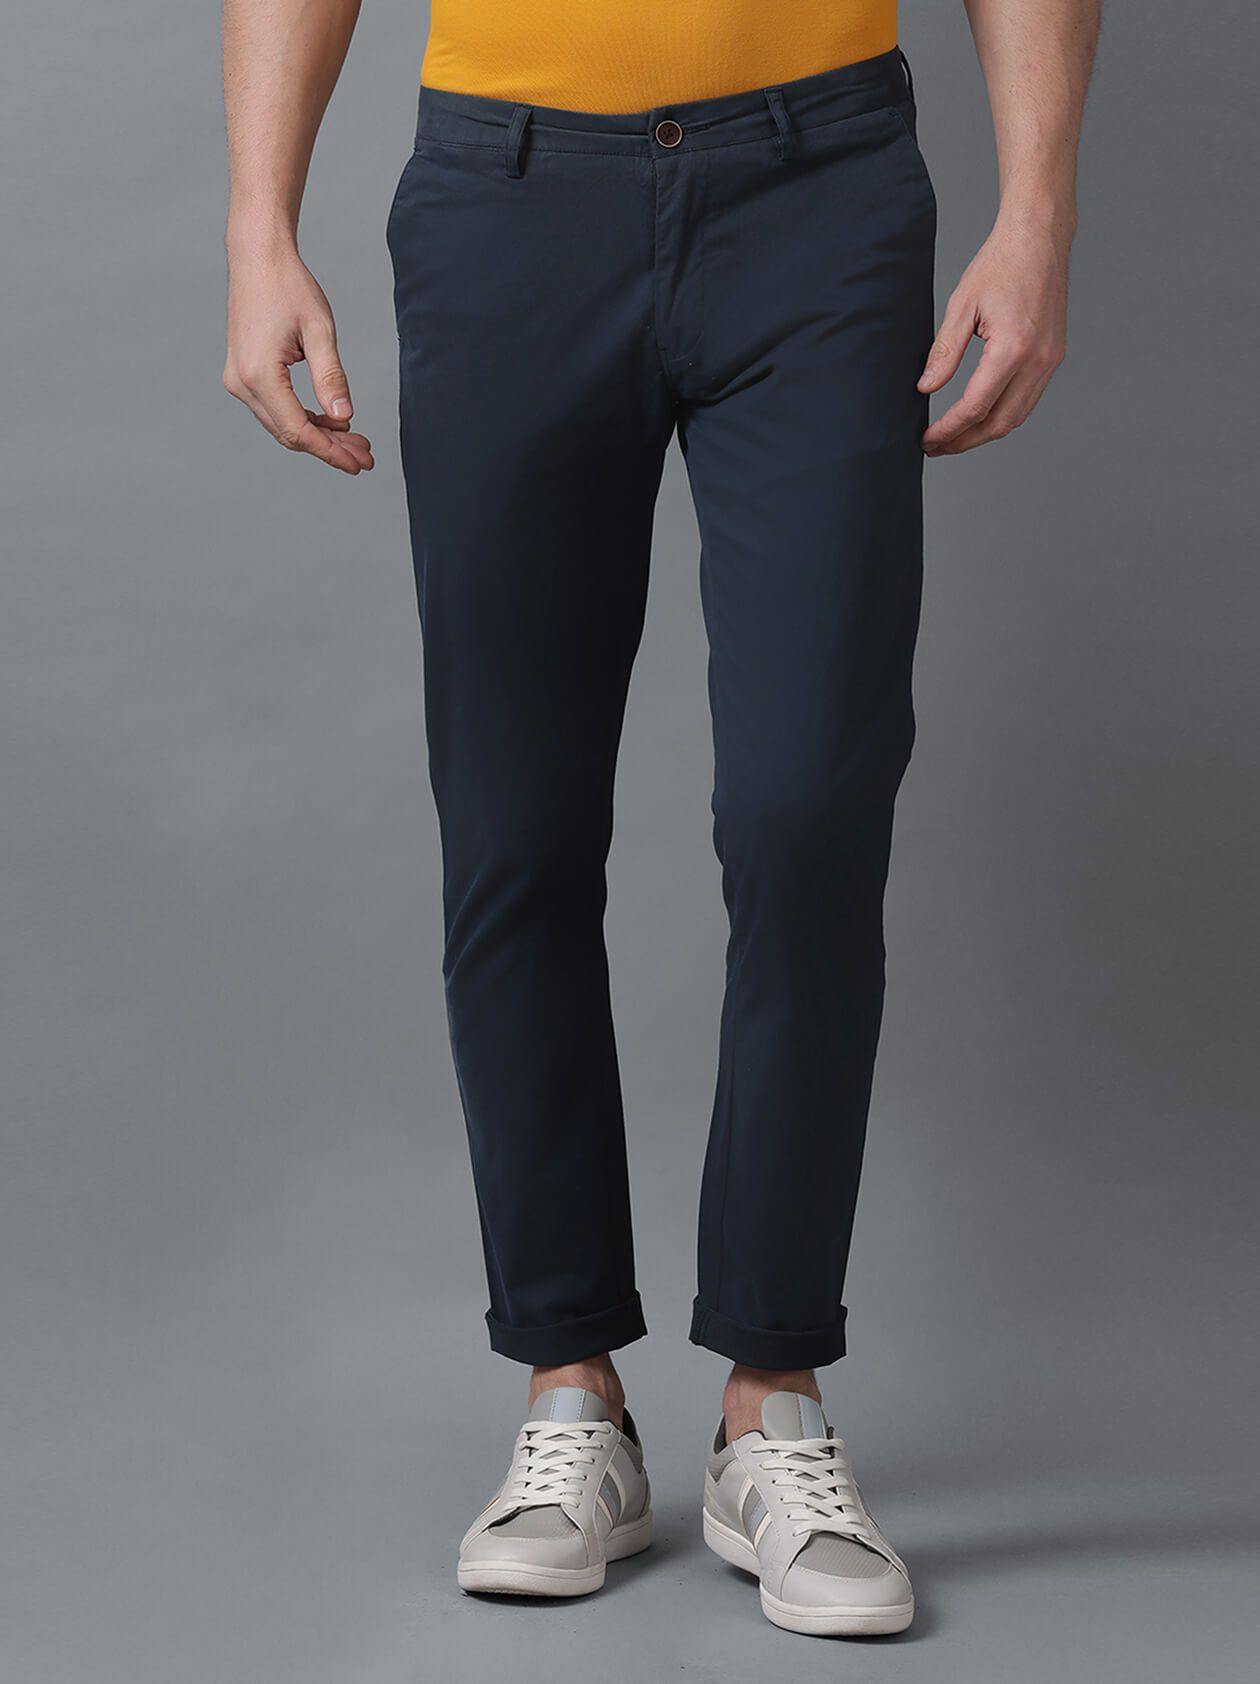 Buy Teal Green Trousers  Pants for Men by Lee Online  Ajiocom